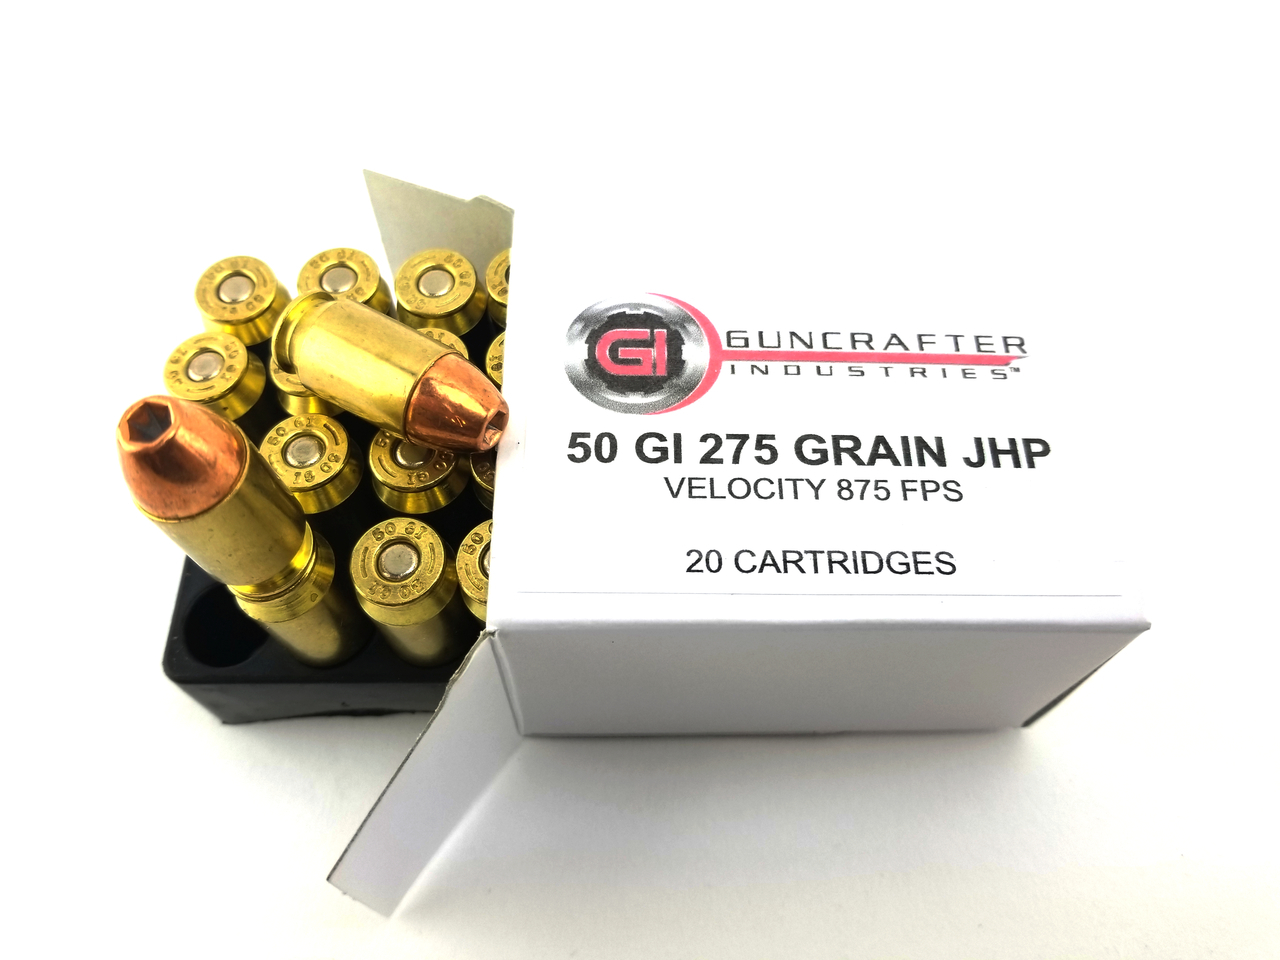 Guncrafter Industries 50GI